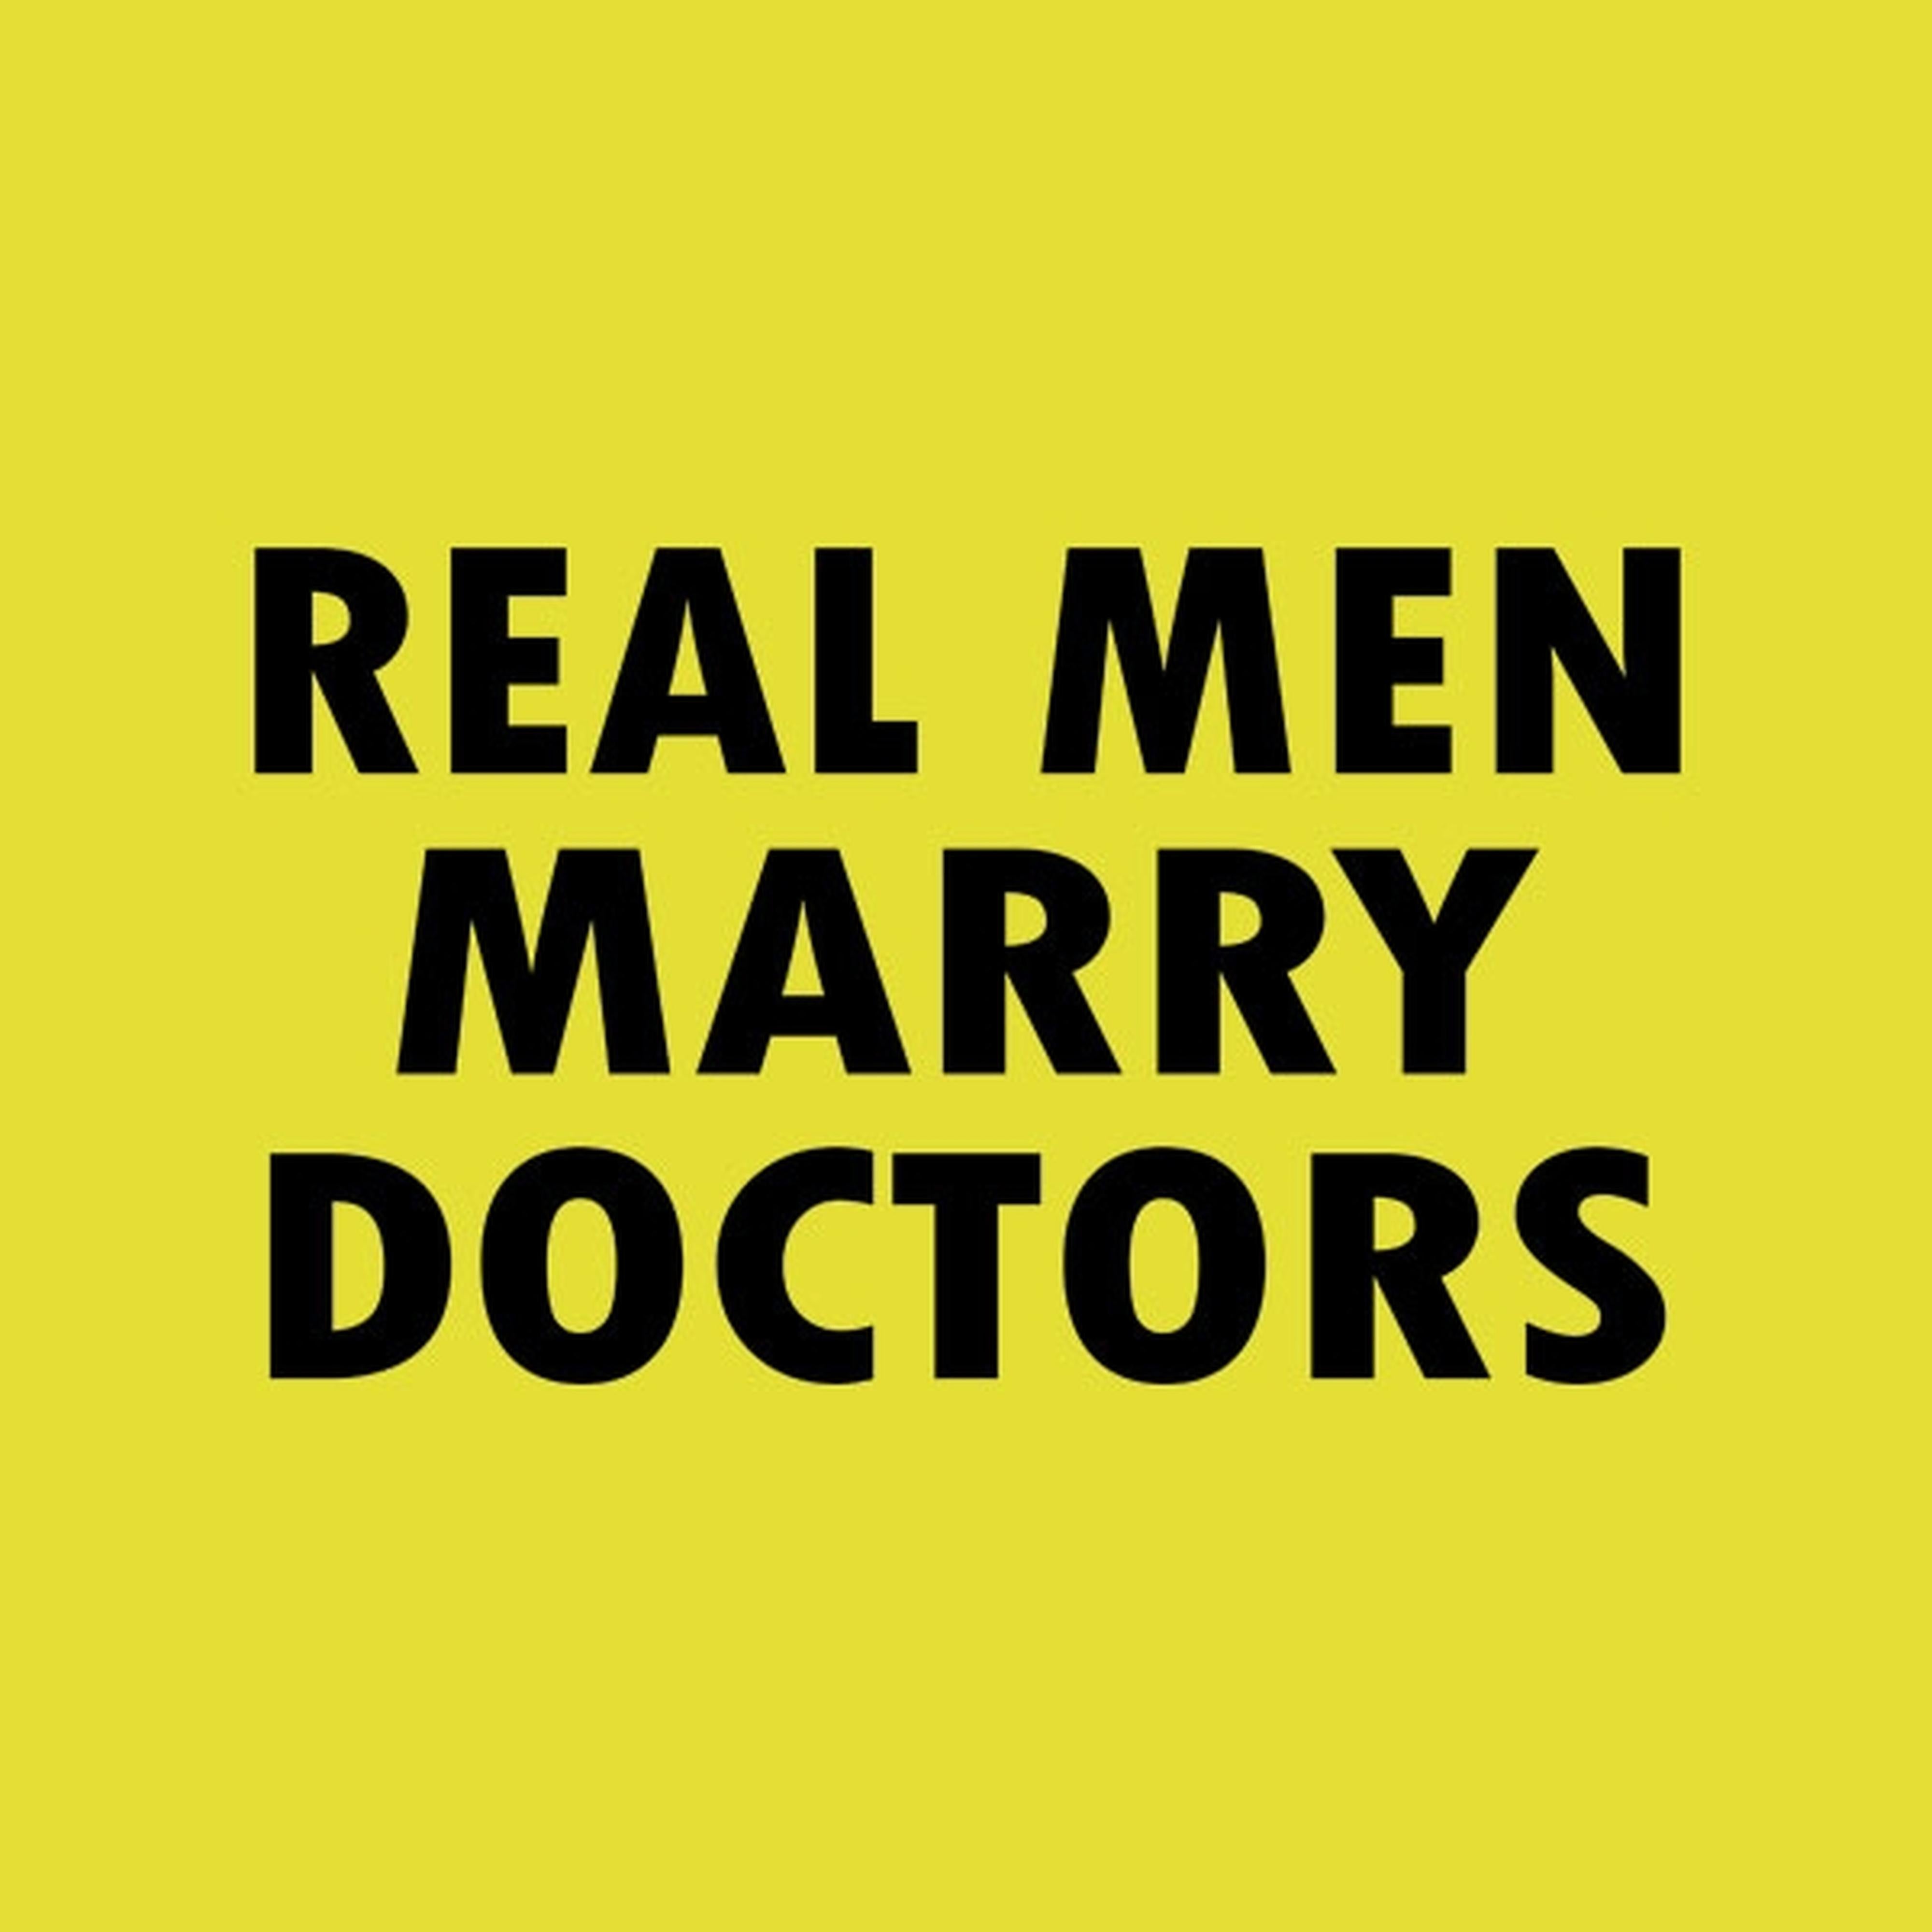 Real men marry doctors - T-shirt